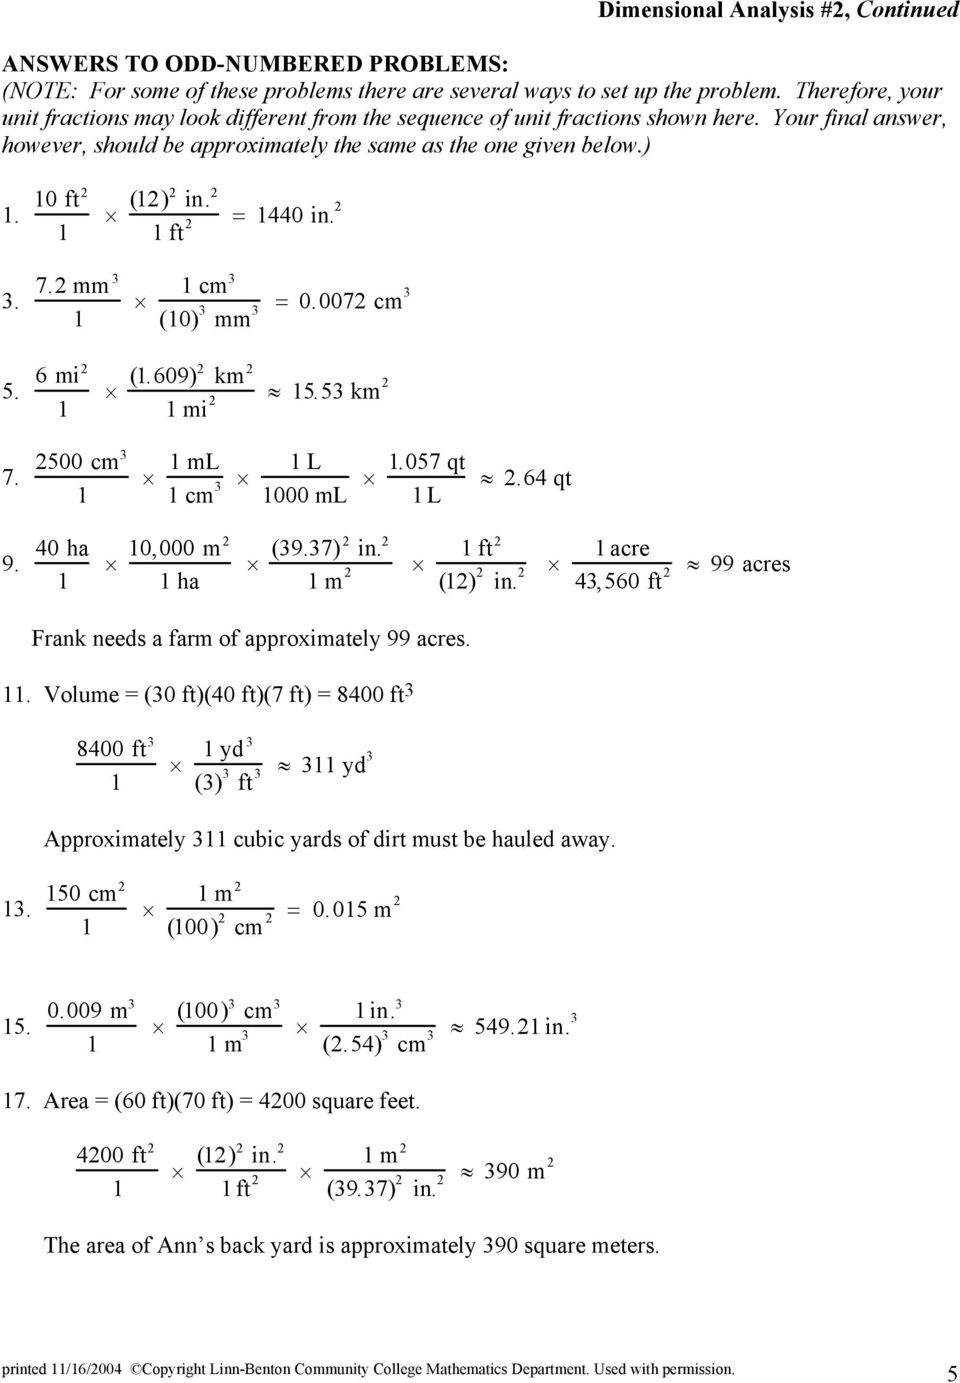 Dimensional Analysis Worksheet Chemistry Dimensional Analysis 2 Pdf Free Download